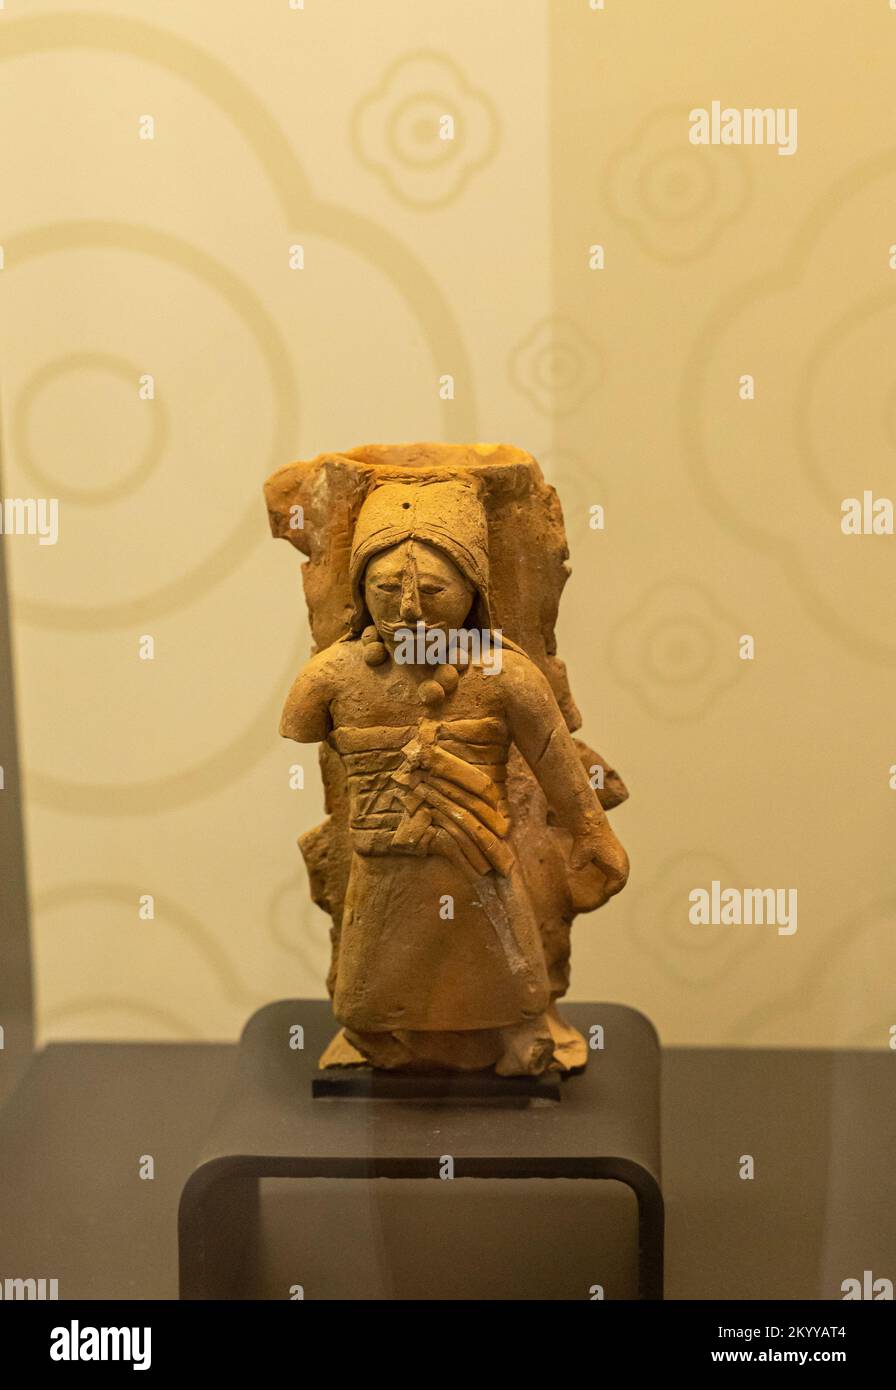 Mayan ceramic figurine of a woman with headpiece. Jaina, Campeche, Mexico. Late classic period. Stock Photo